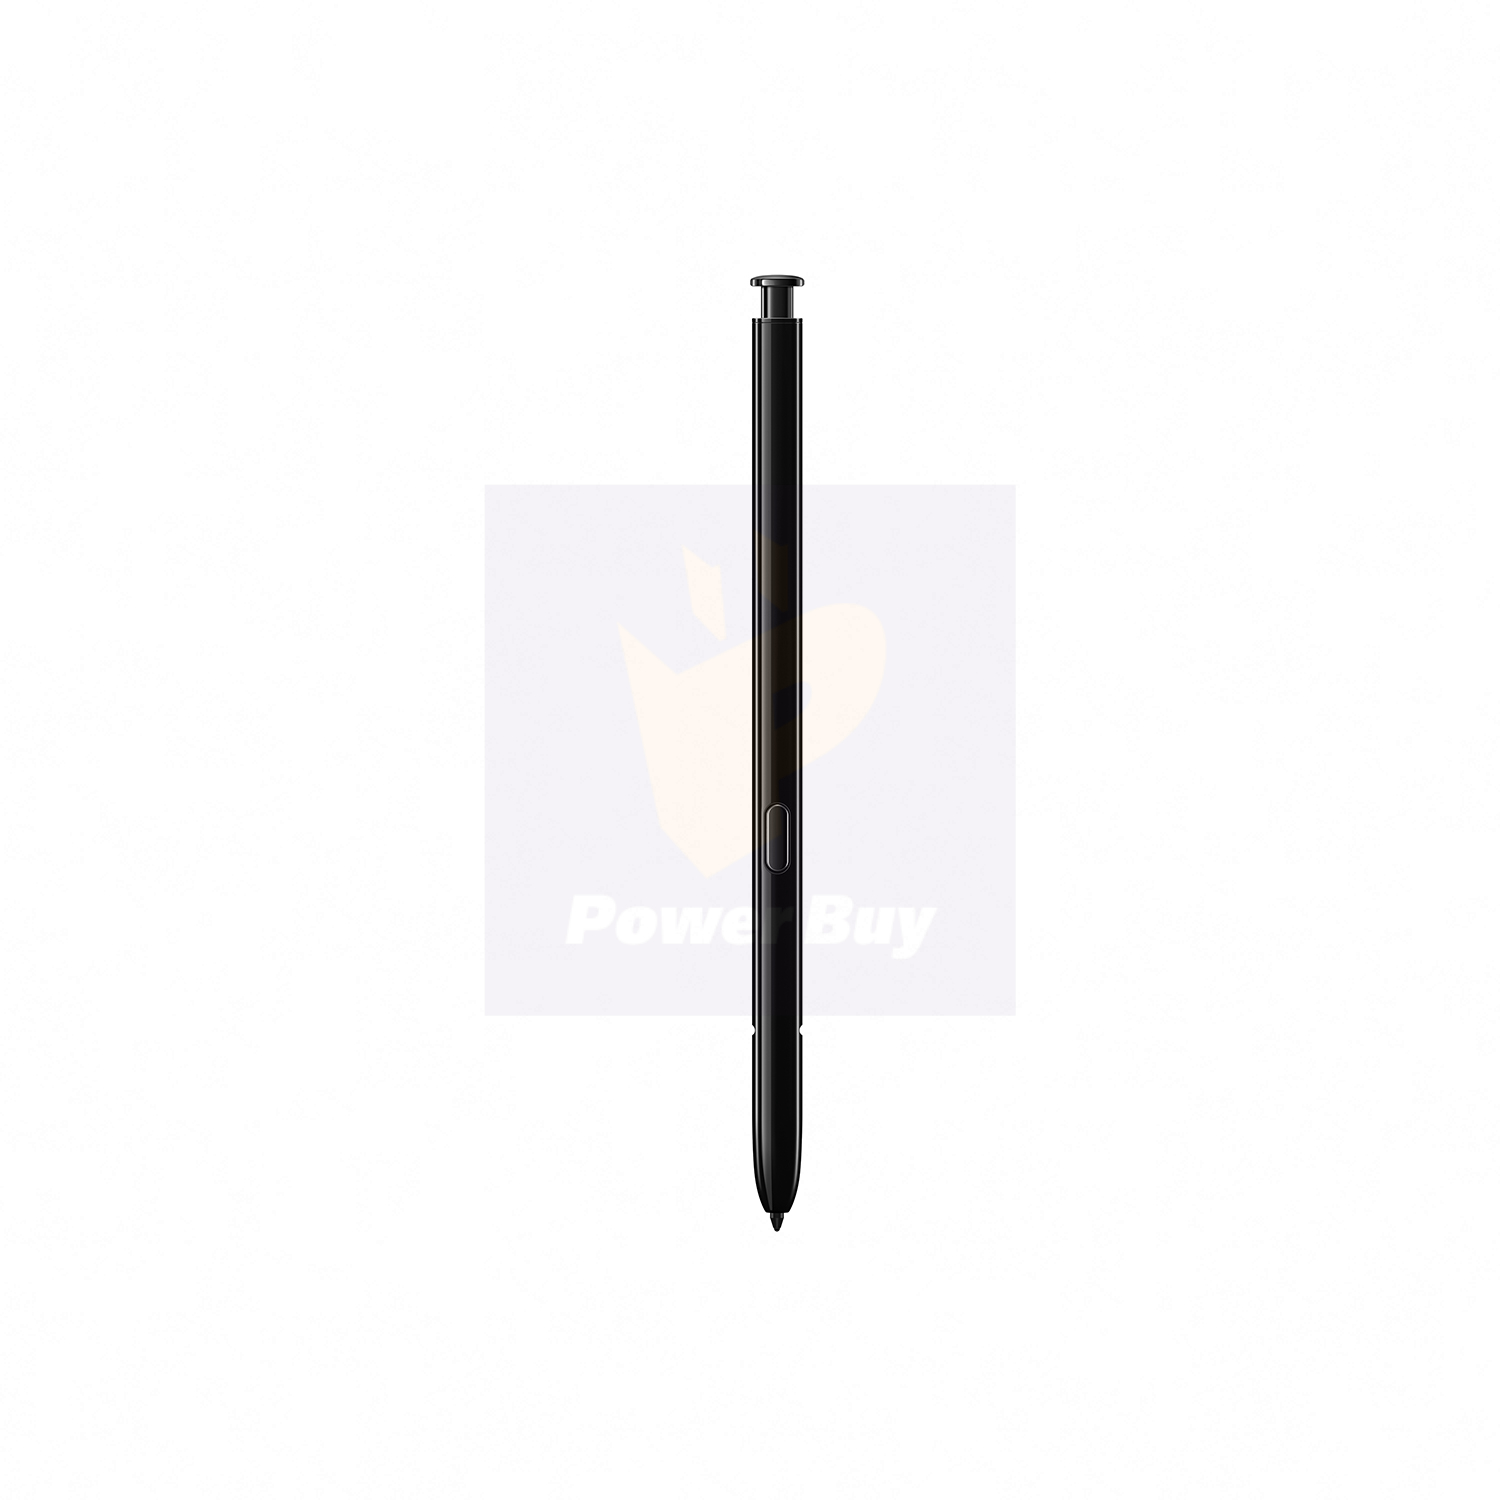 Samsung Galaxy Note 20 Ultra (Mystic Black)